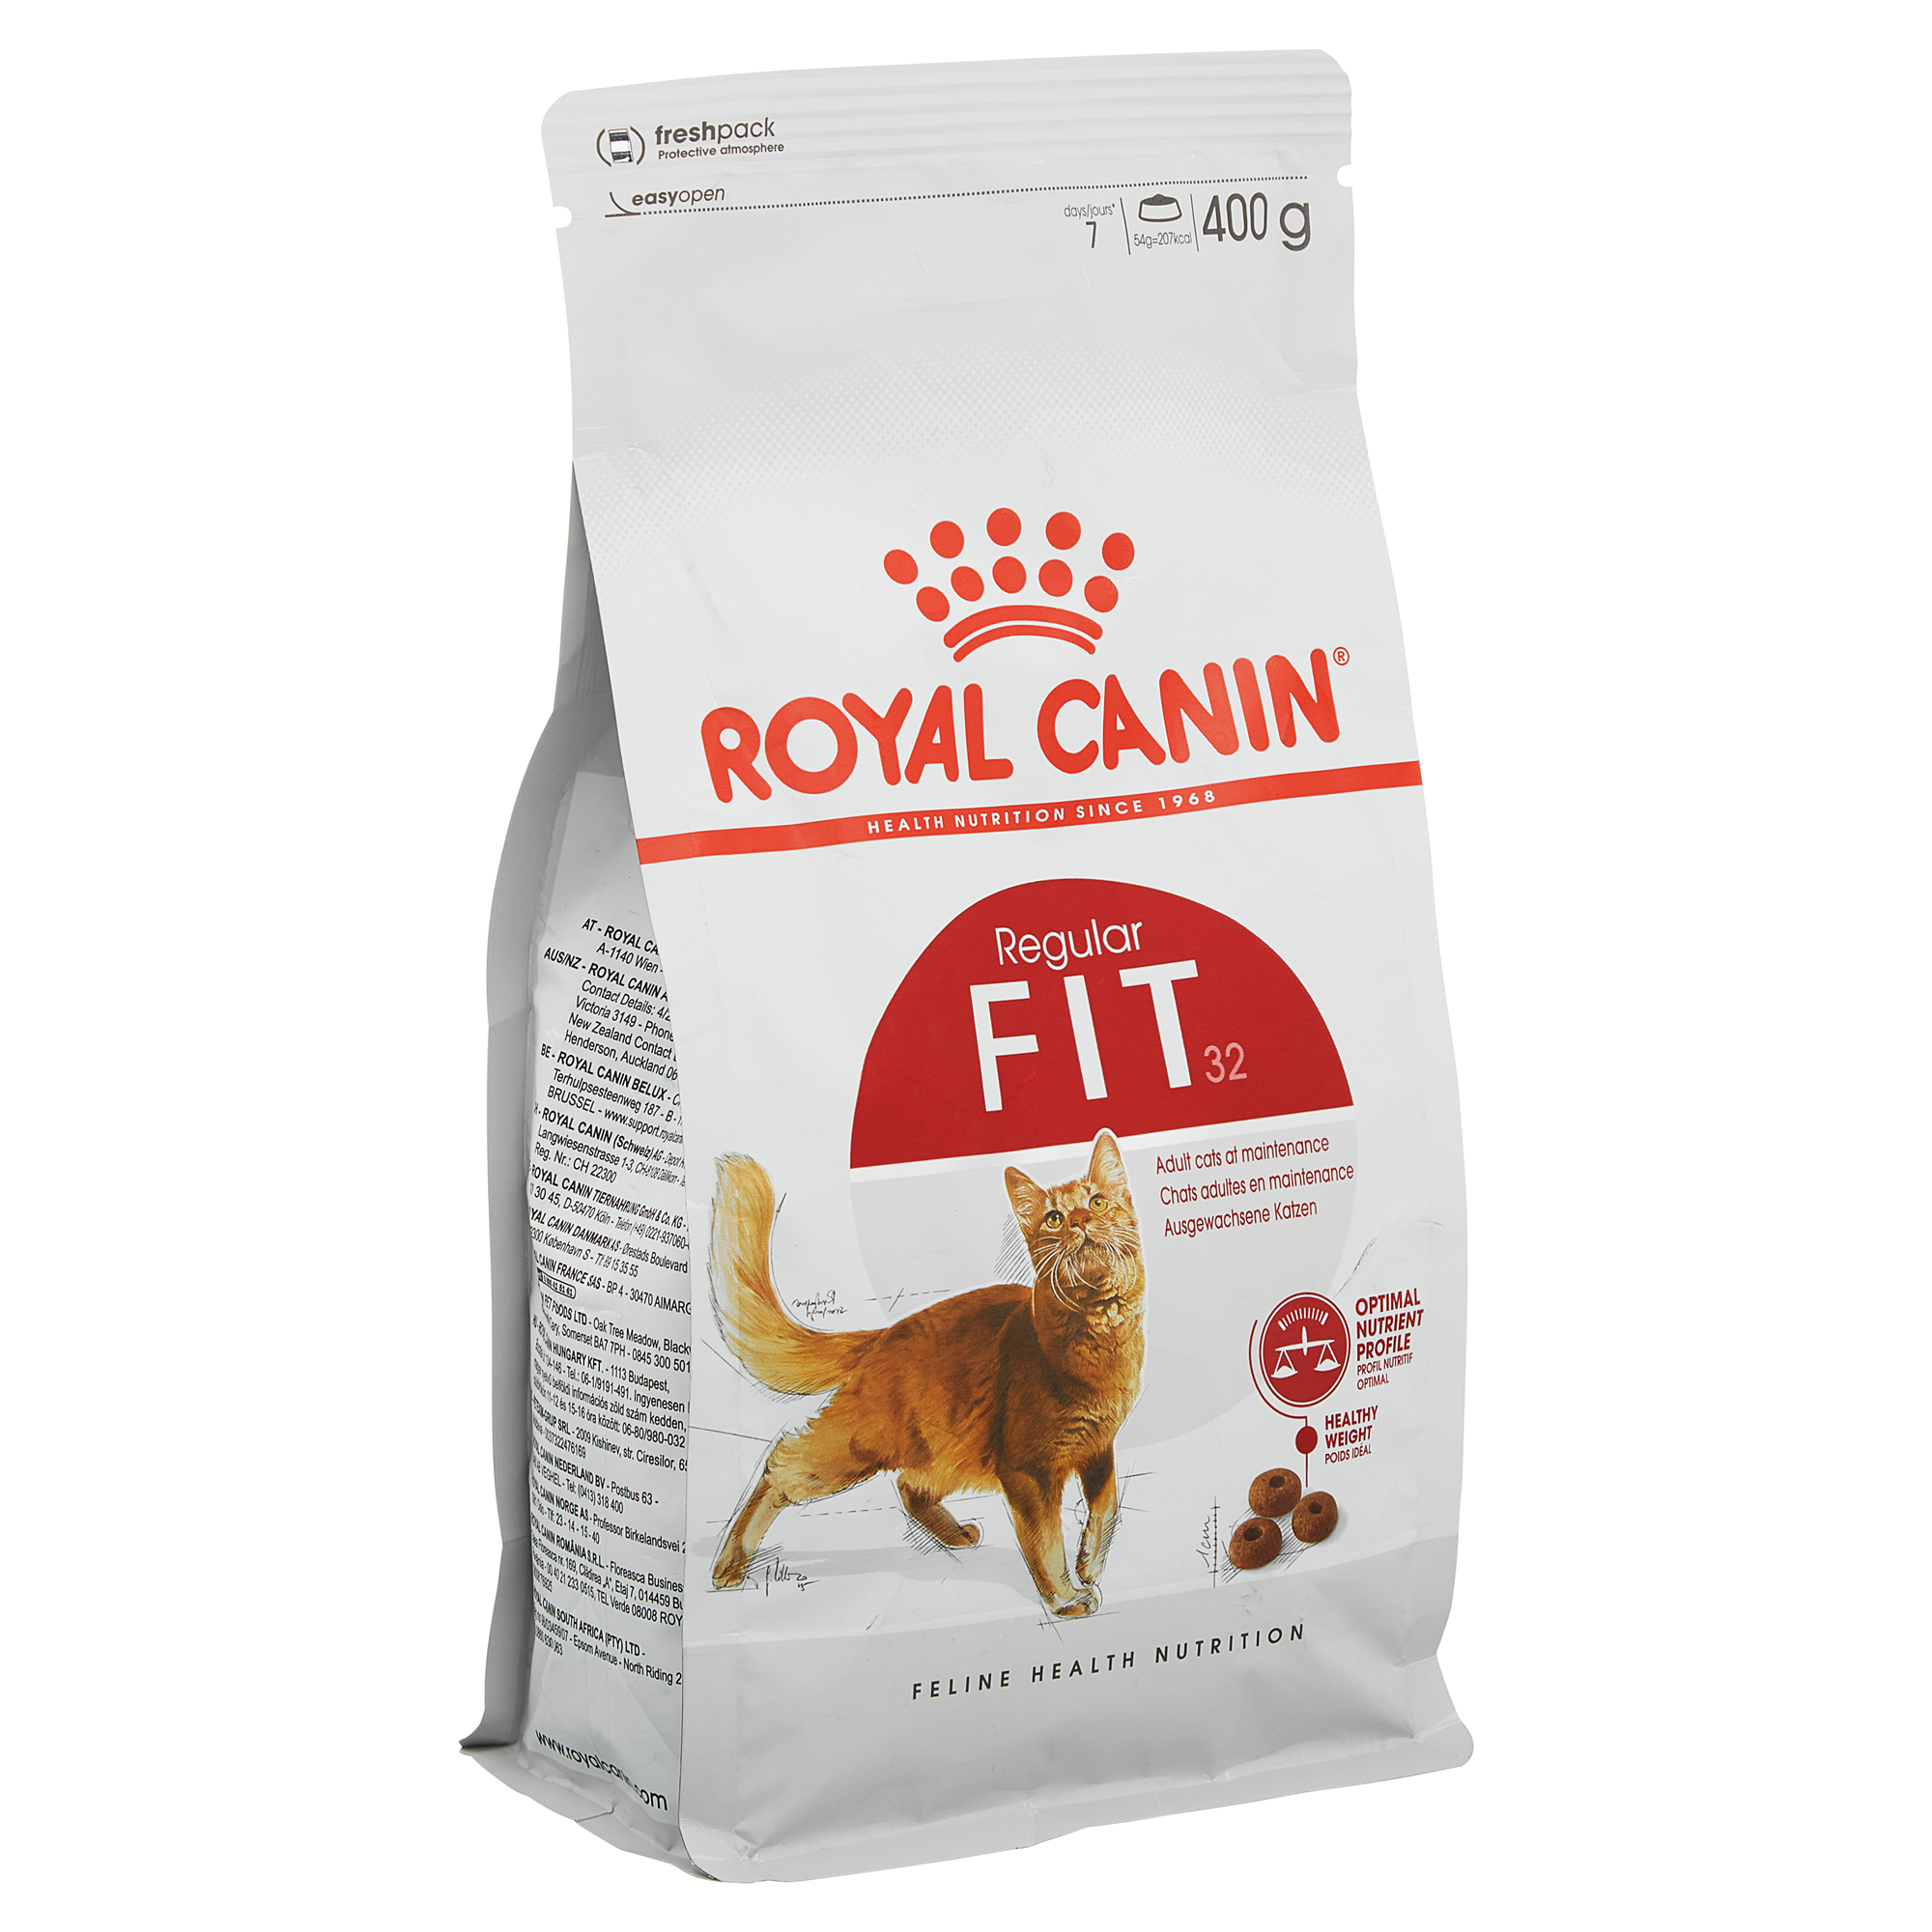 Katzentrockenfutter "Feline Health Nutrition" Regular Fit 32 0,4 kg + product picture